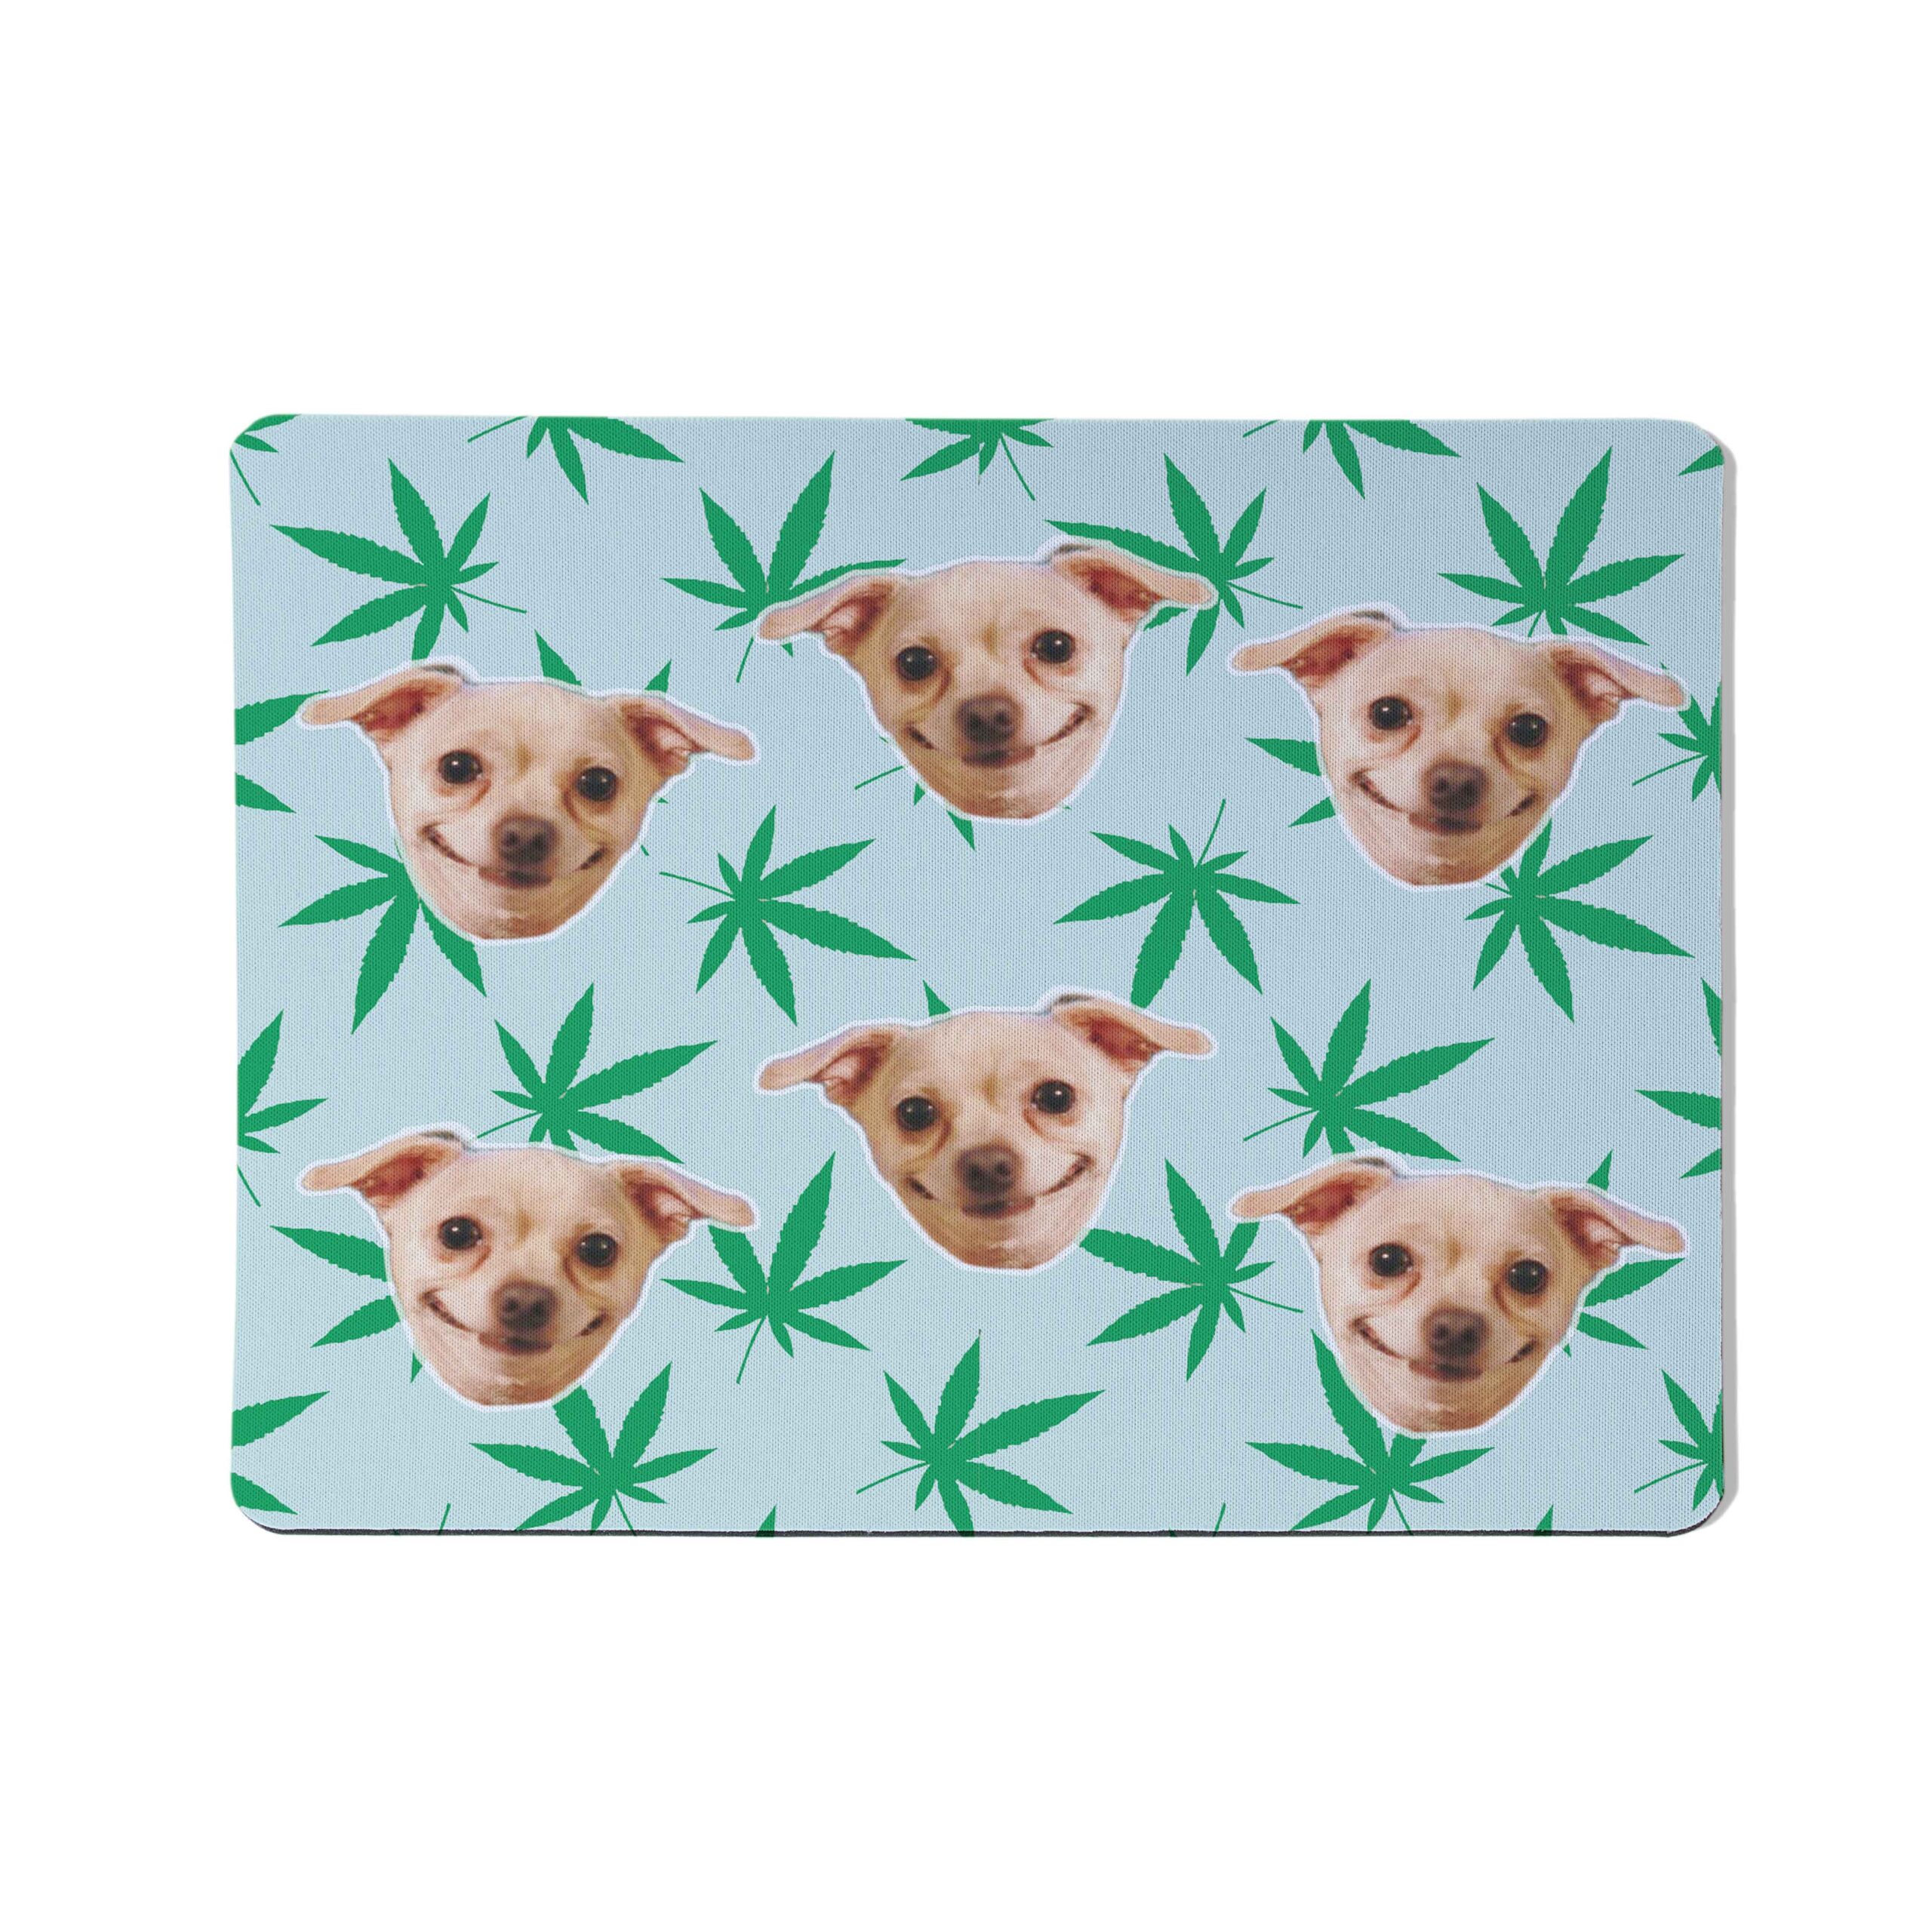 Mousepad-Personalizadas-Cannabis—weed—marihuana1